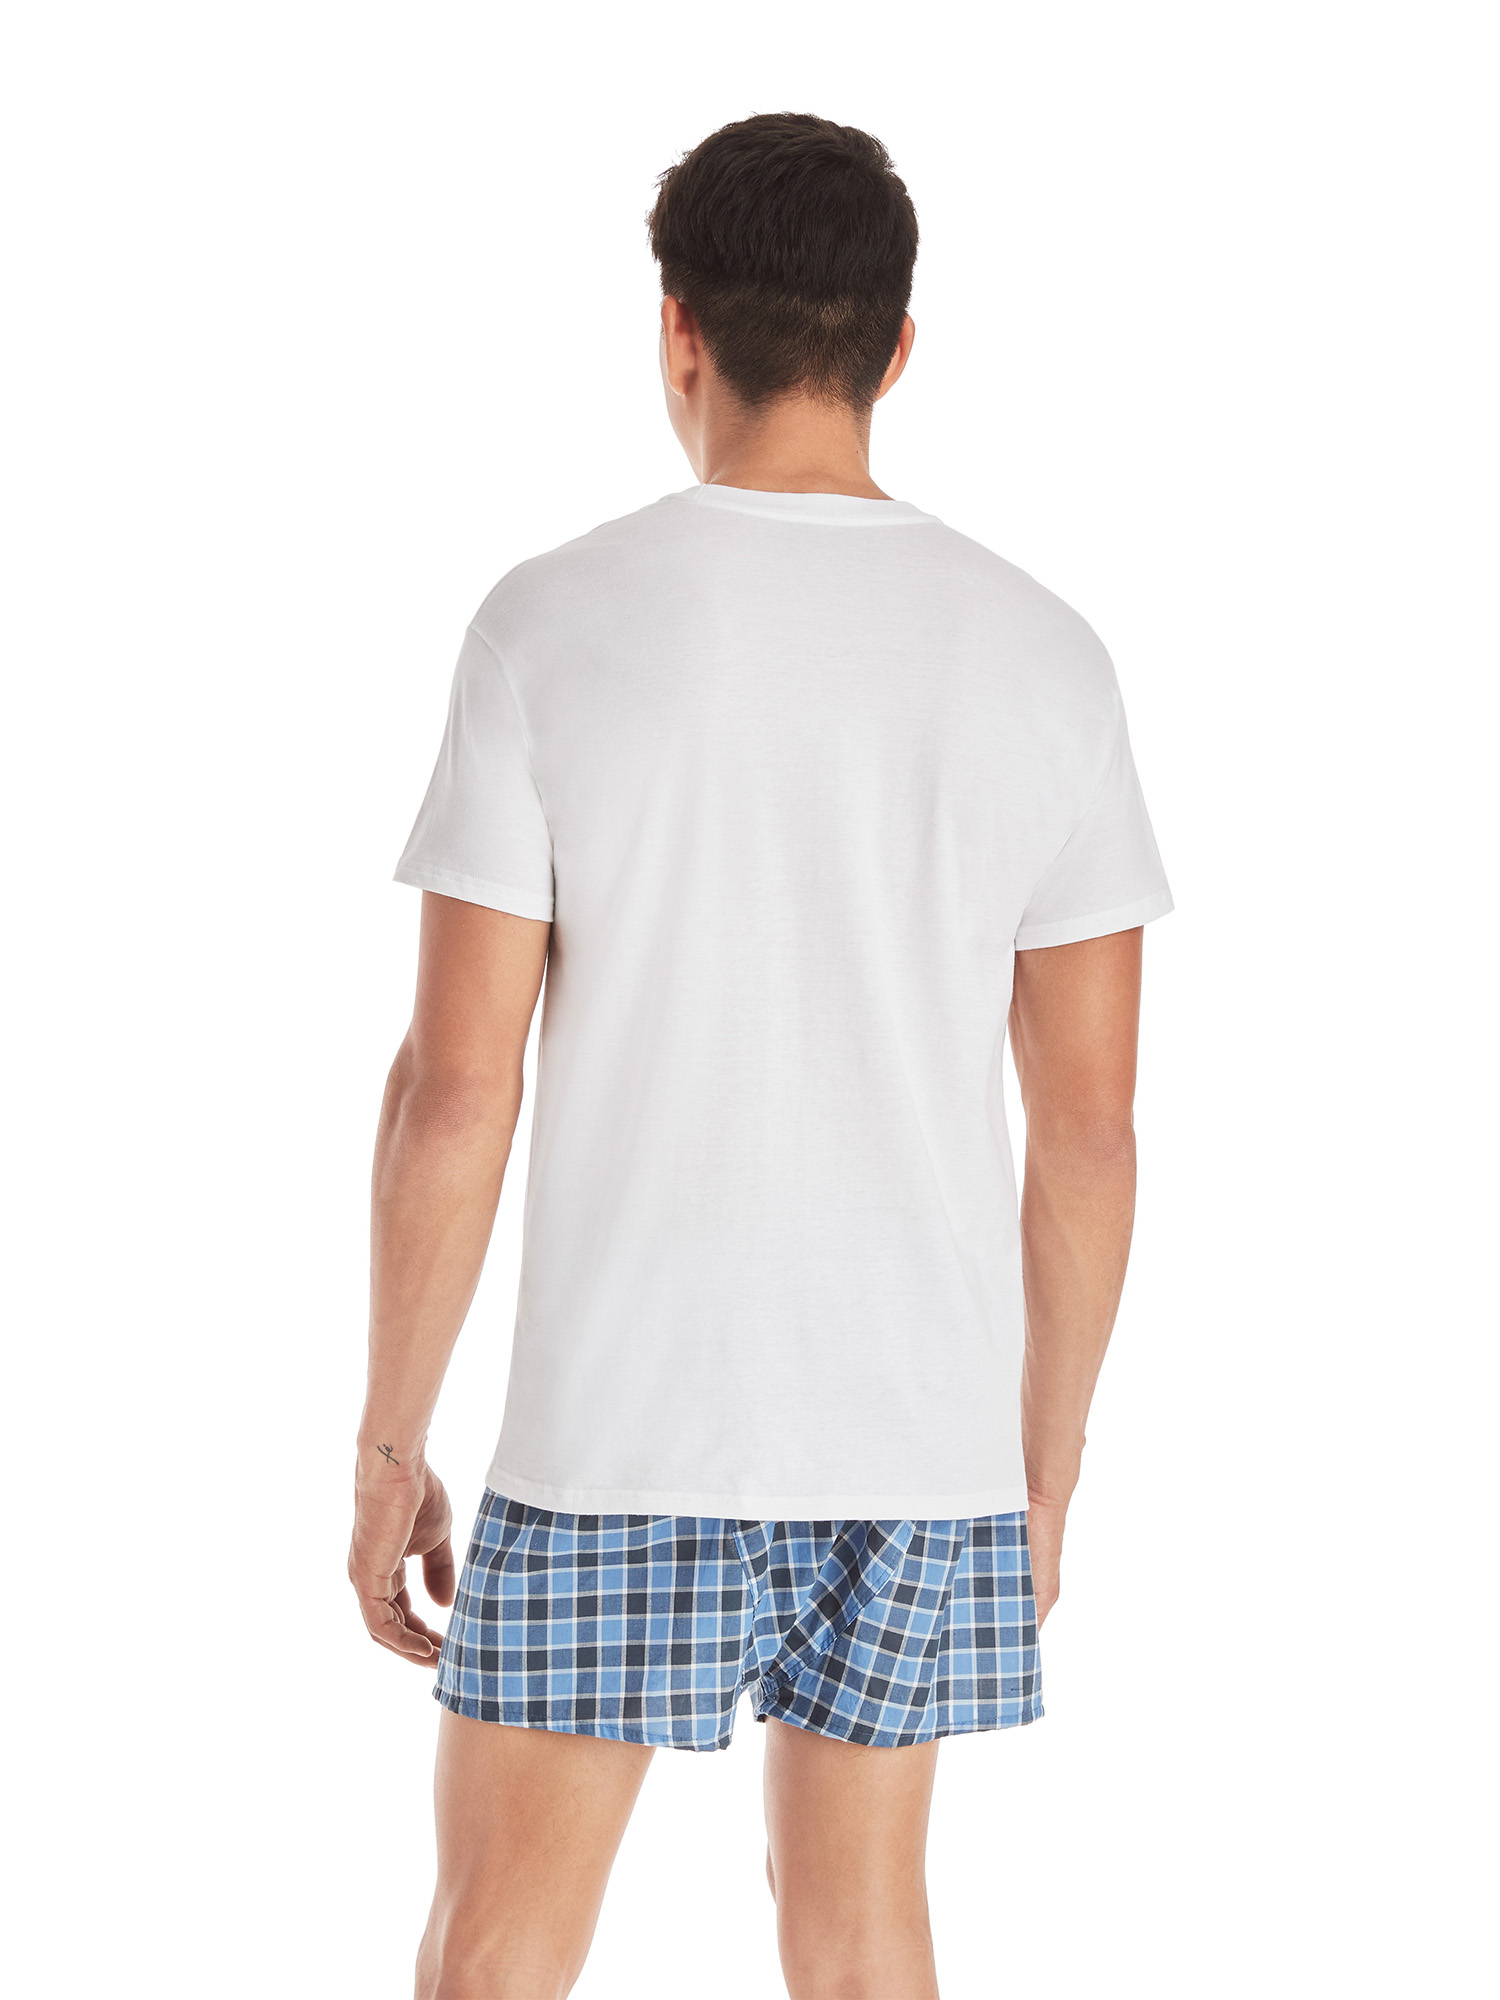 Hanes Men's Super Value Pack White V-Neck Undershirts, 10 Pack - image 4 of 9